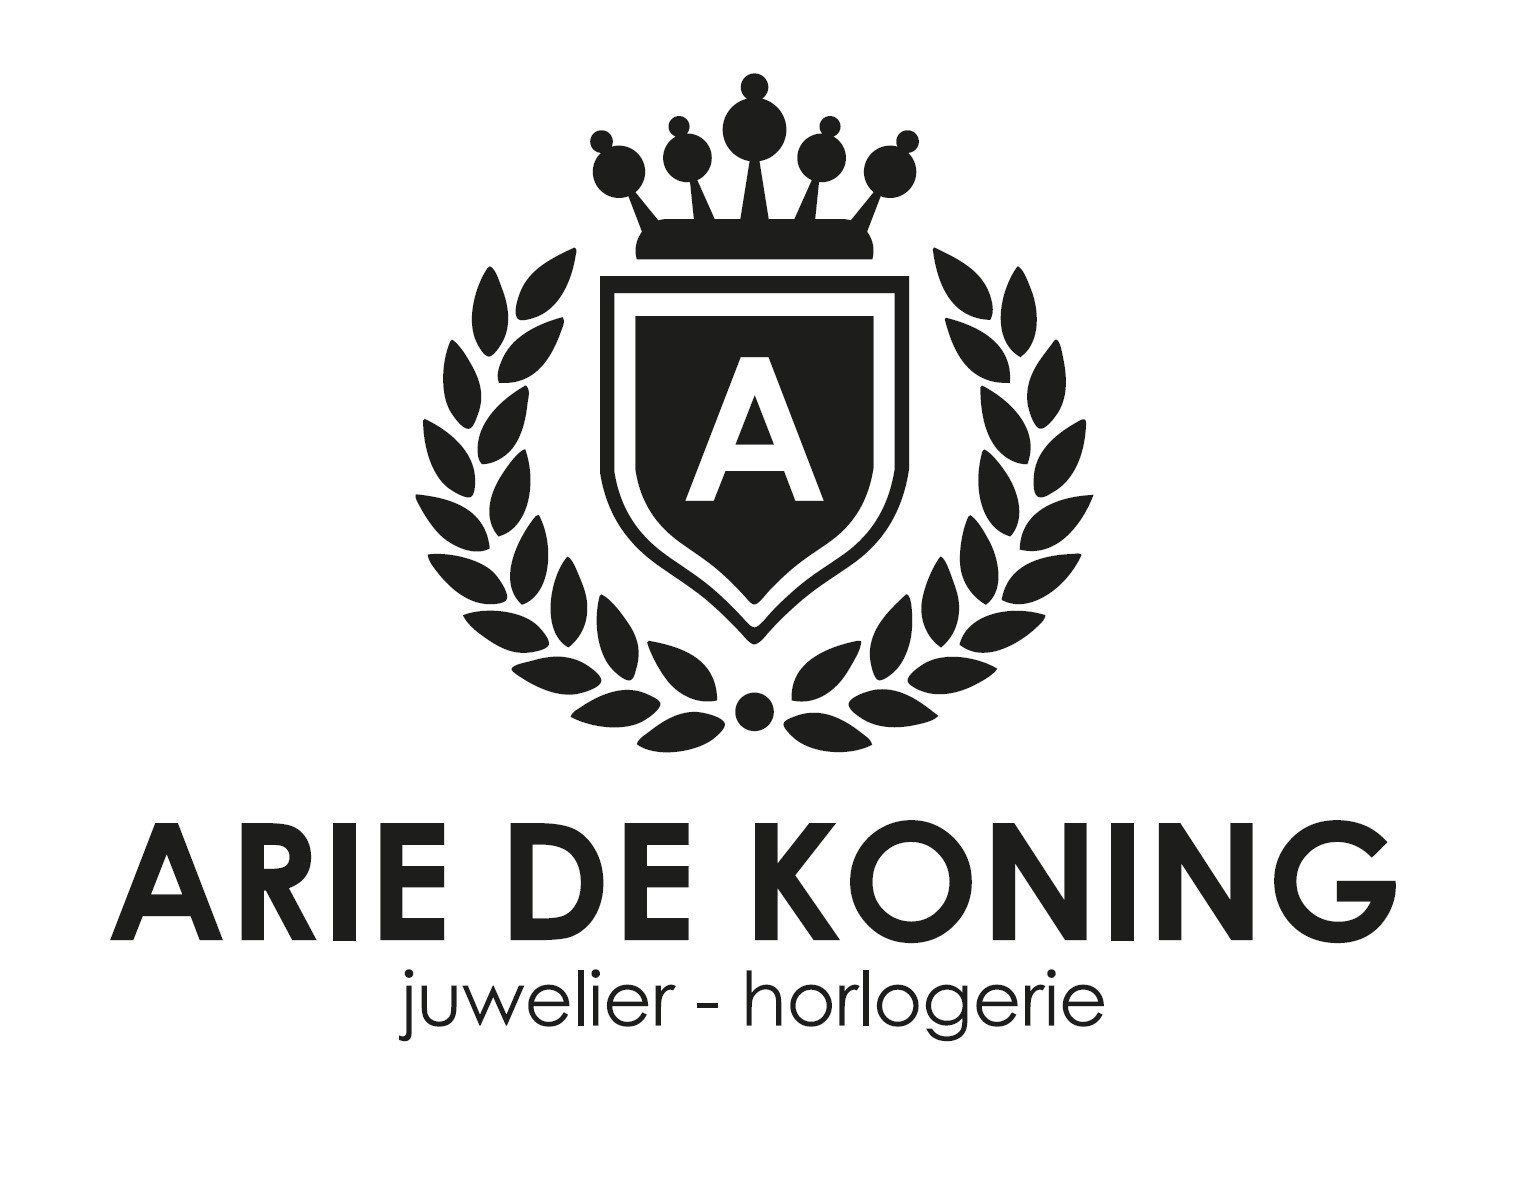 (c) Ariedekoning.nl